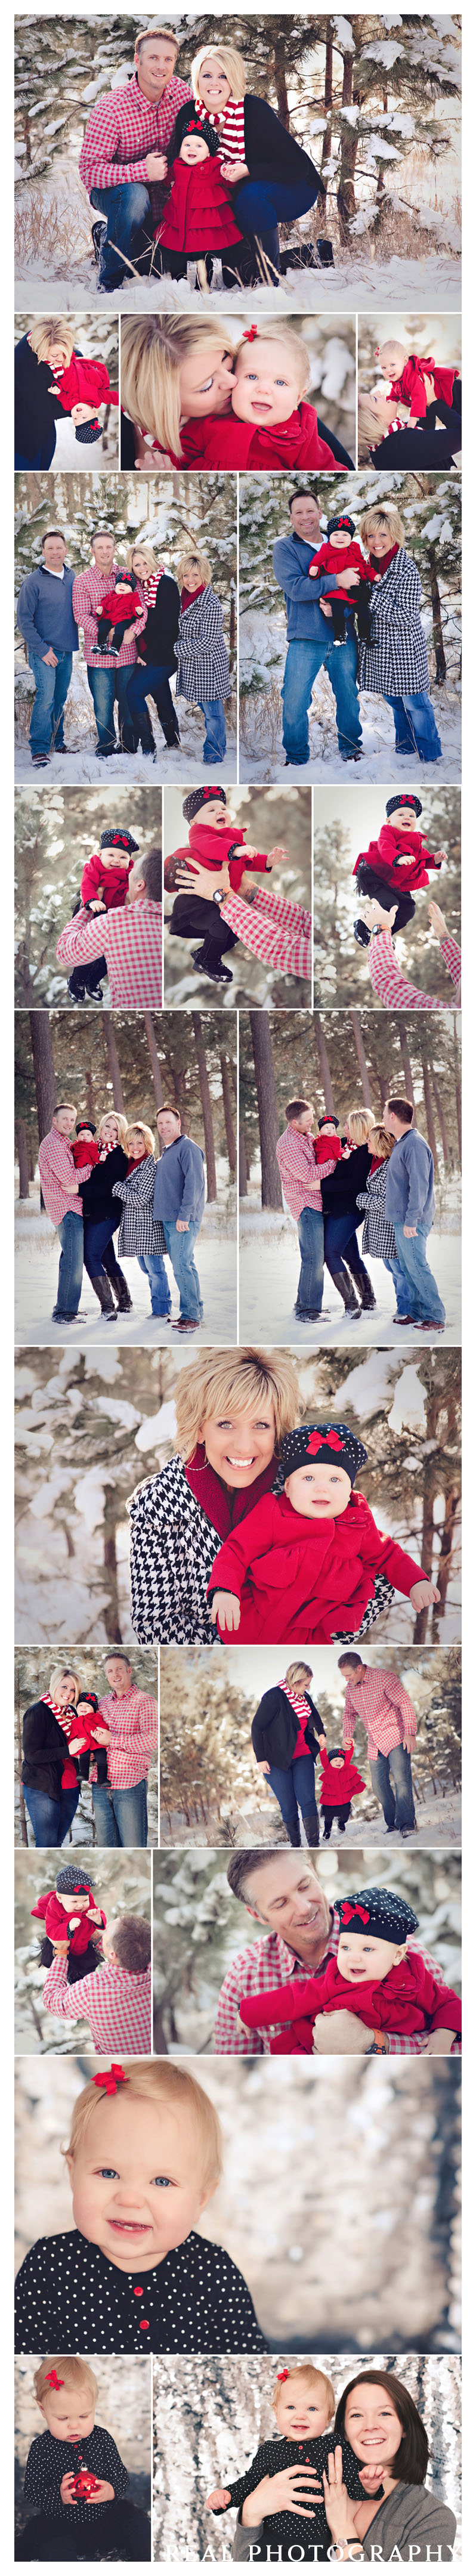 family portraits winter snow colorado